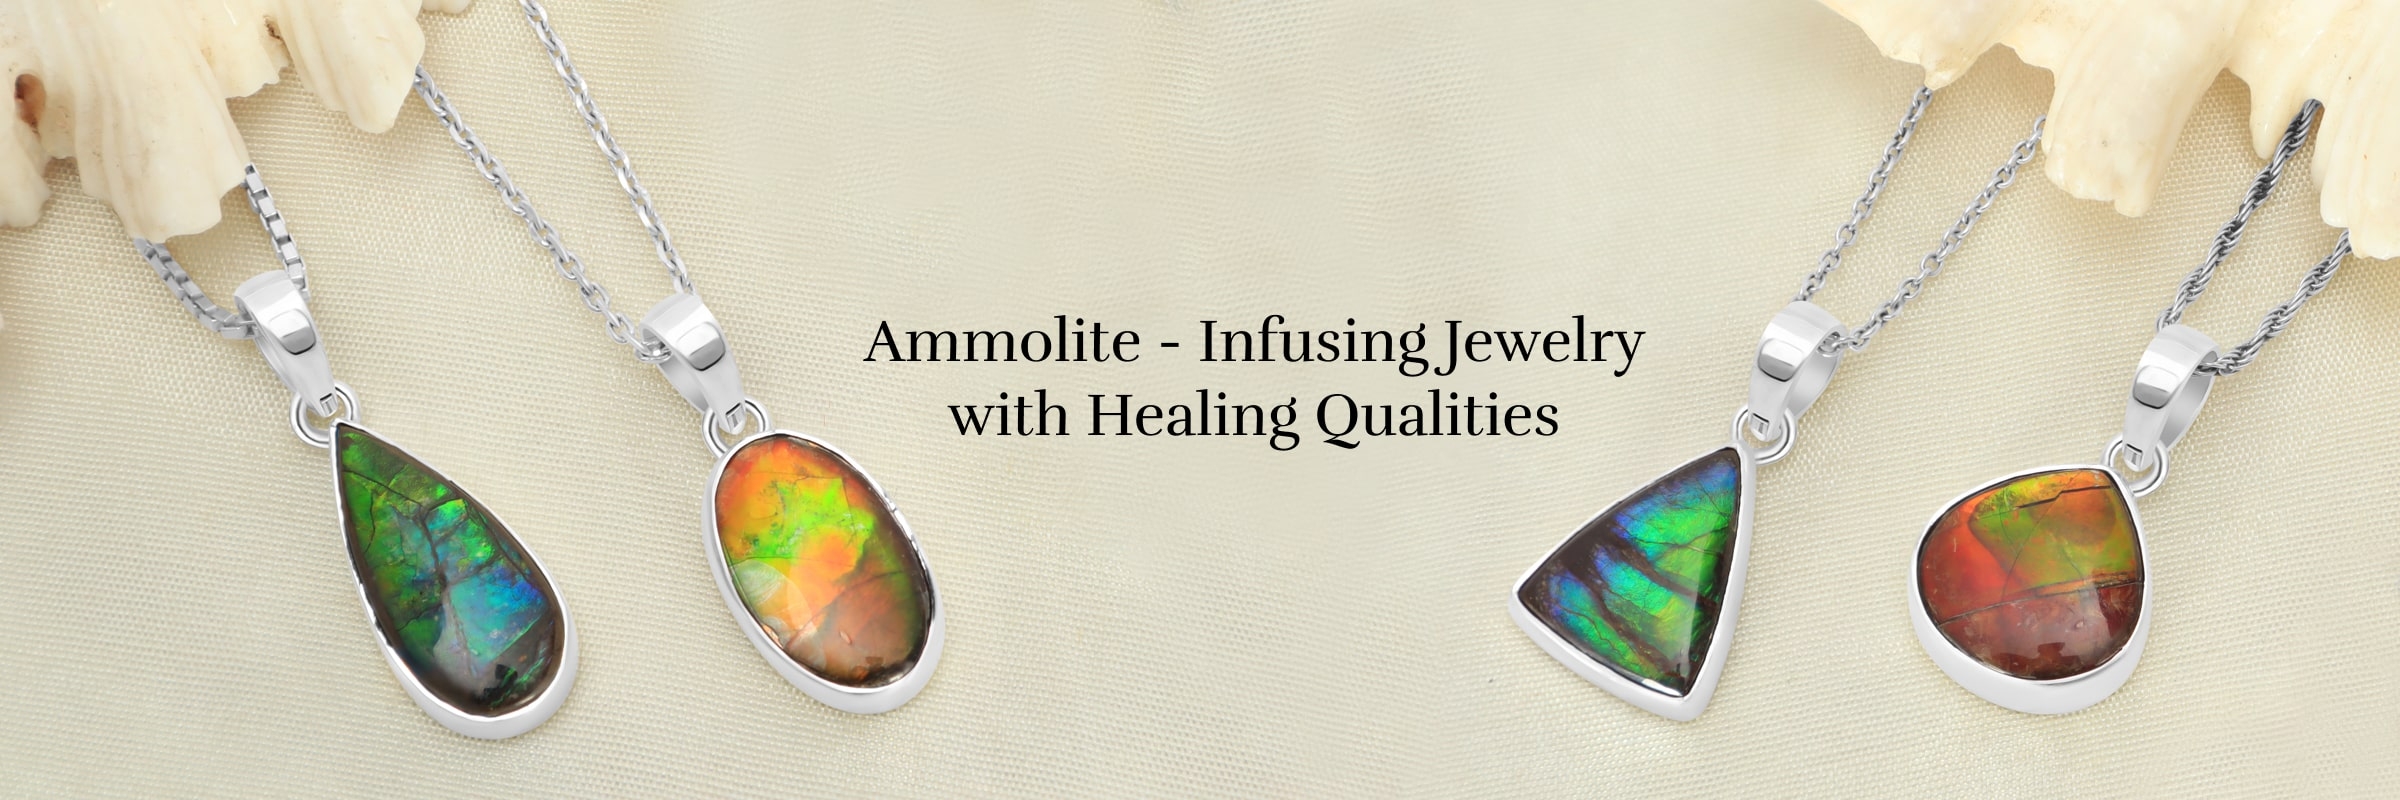 Healing Properties of Ammolite Jewelry